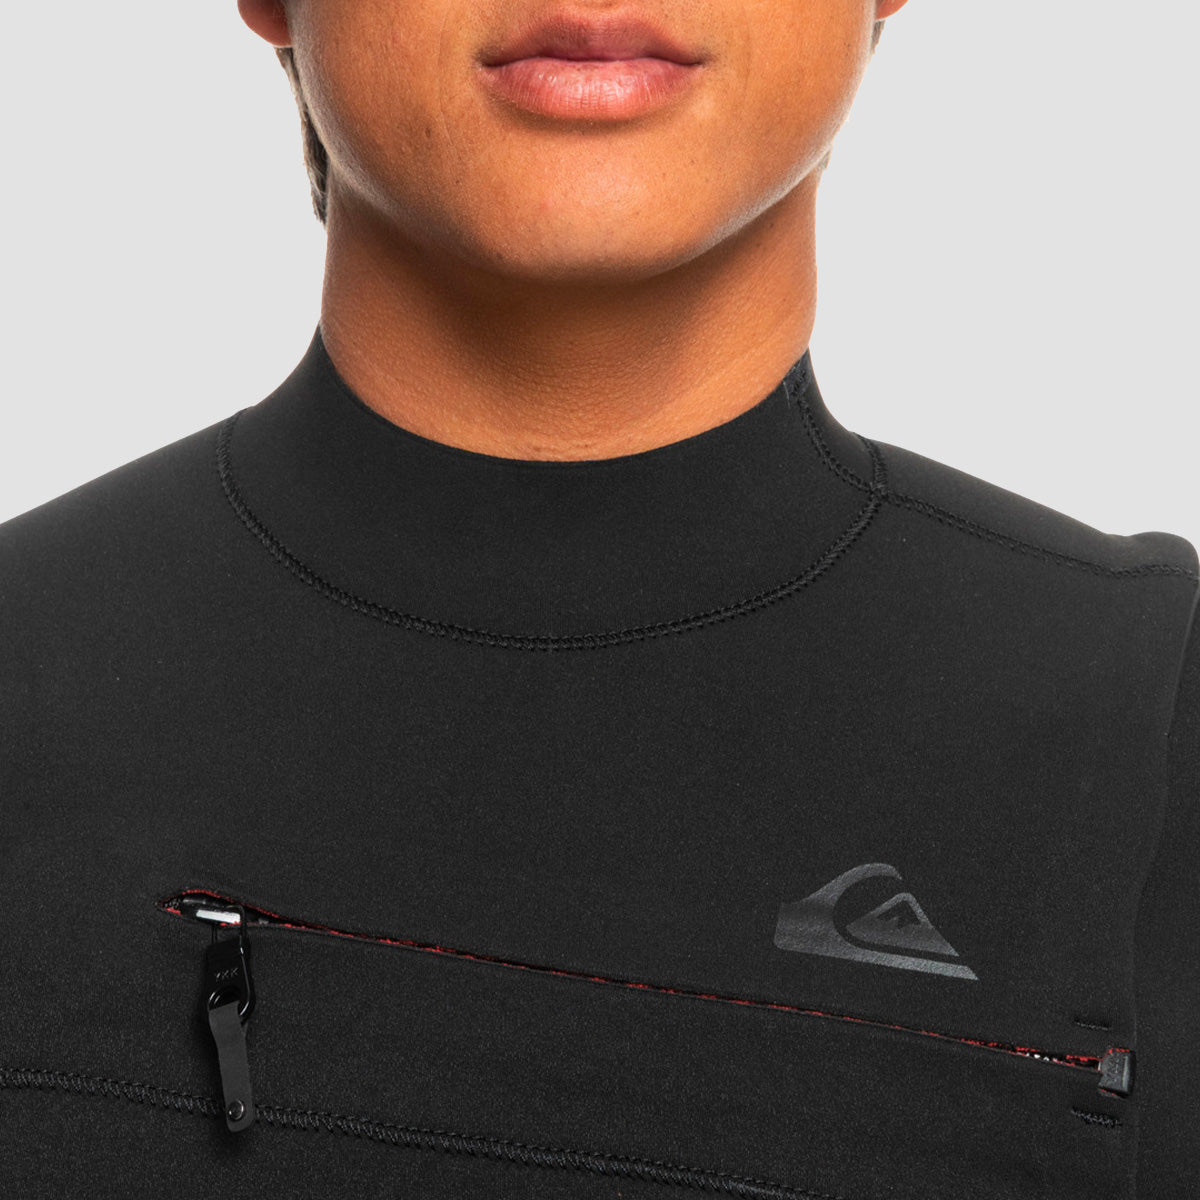 Quiksilver Highline 3/2mm GBS Chest Zip Wetsuit Black